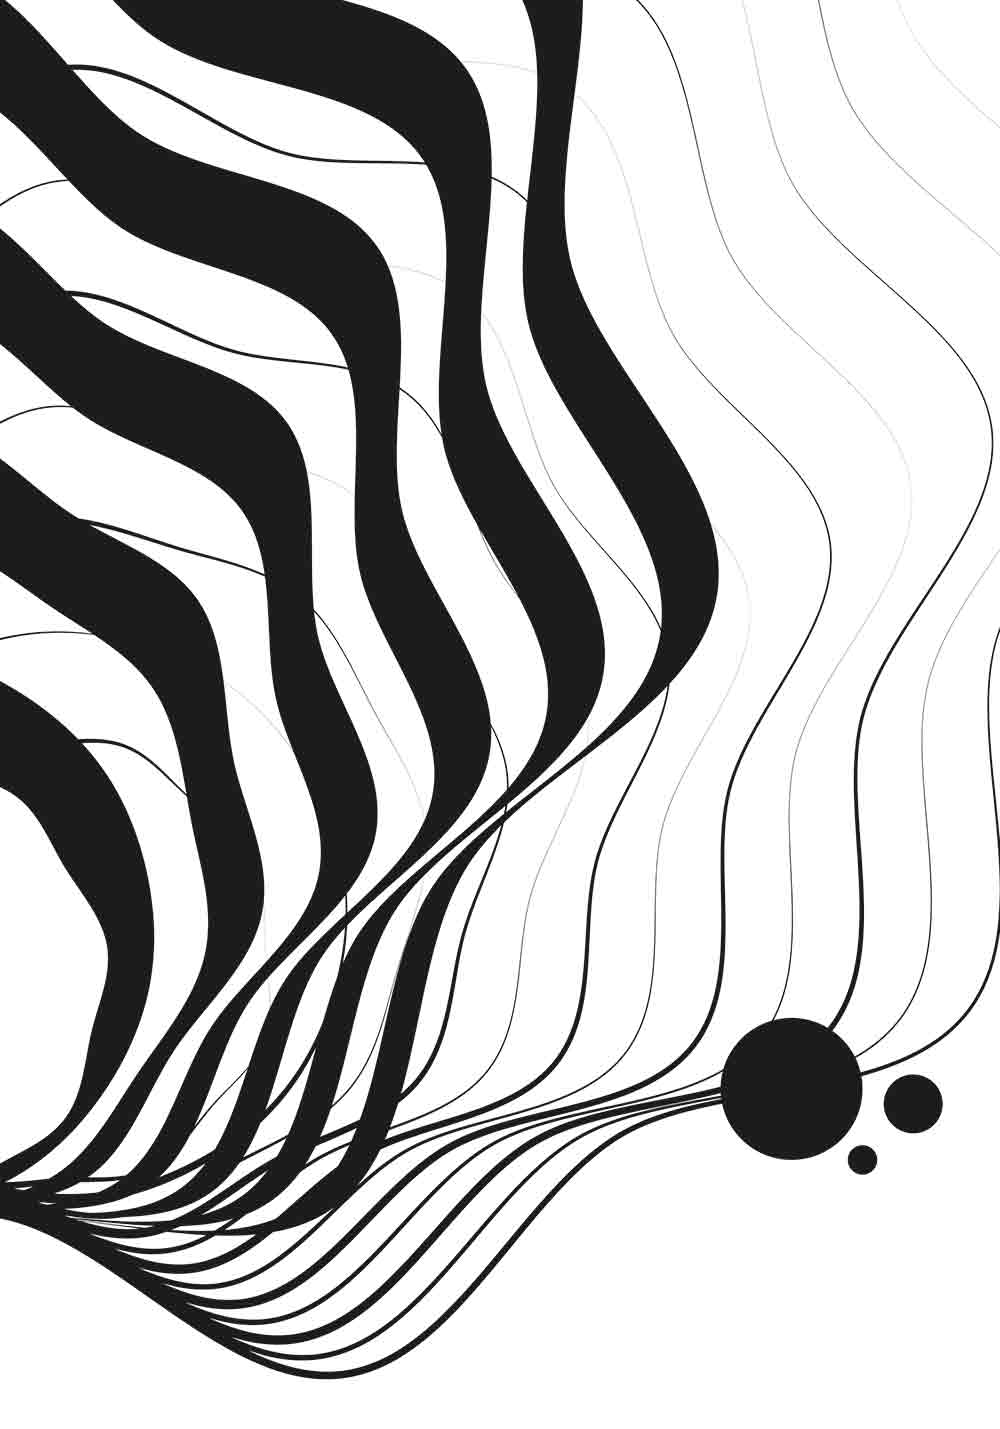 Poster d'art abstrait - Motif moderne noir et blanc Poster